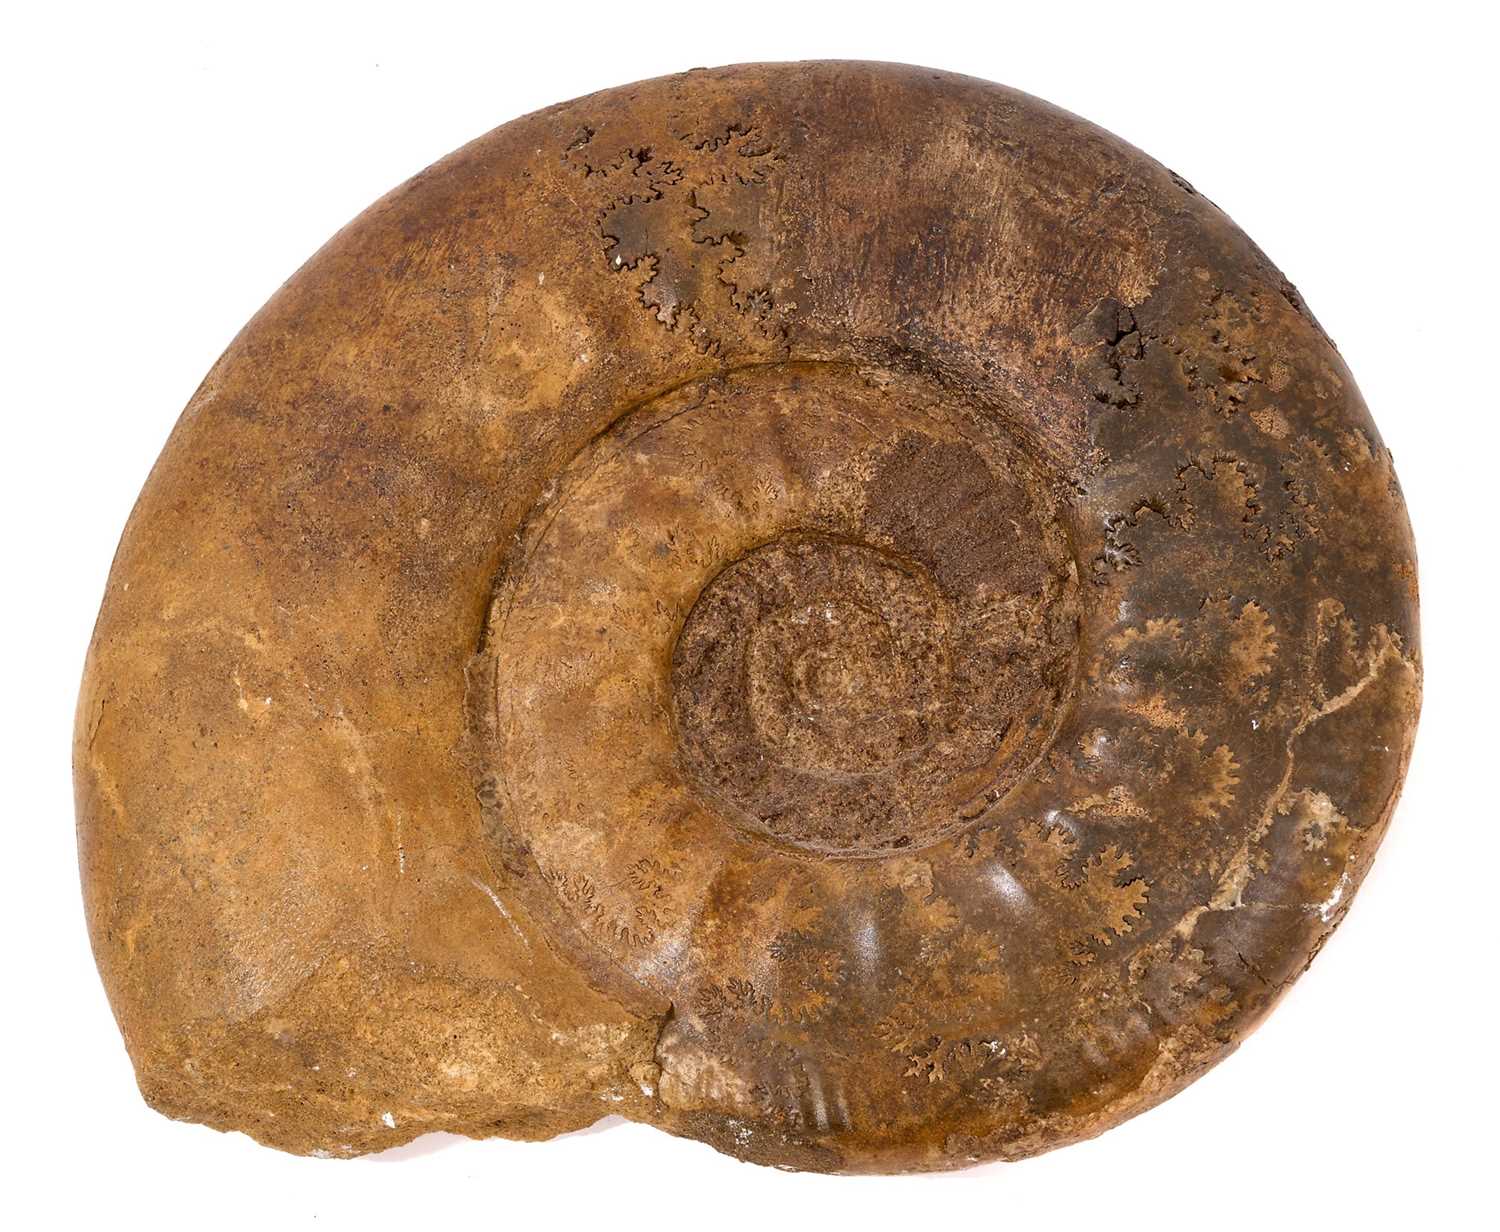 Good specimen ammonite - Propanulaites, collector's label